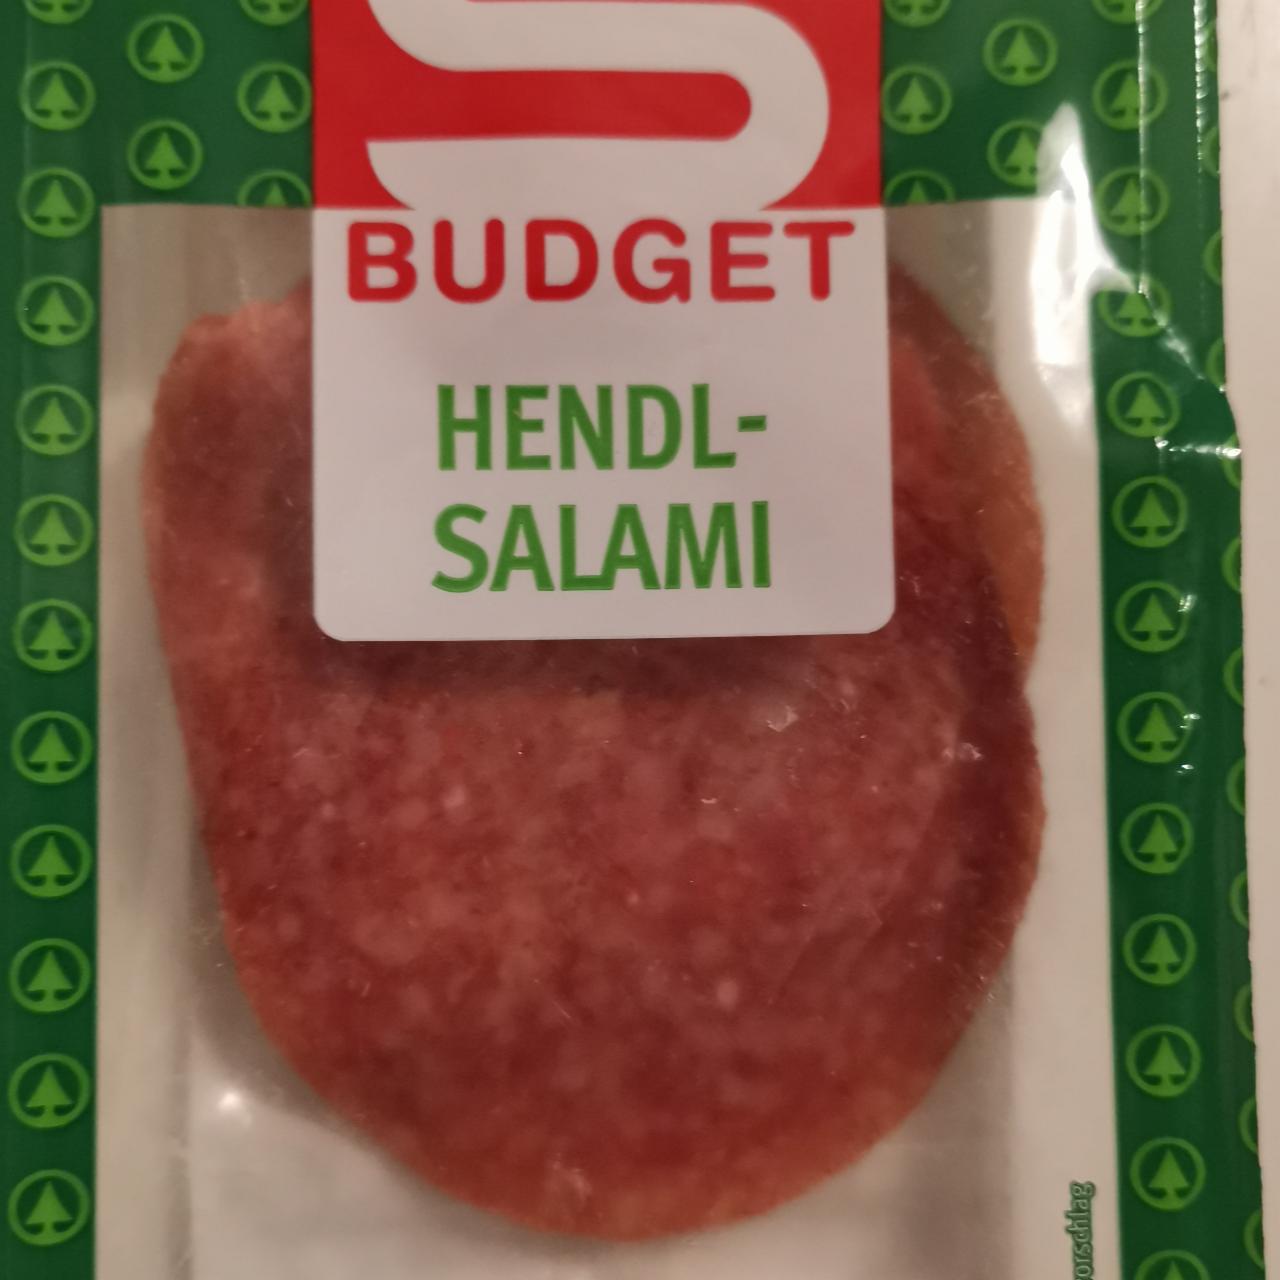 Fotografie - Hendl-salami S budget